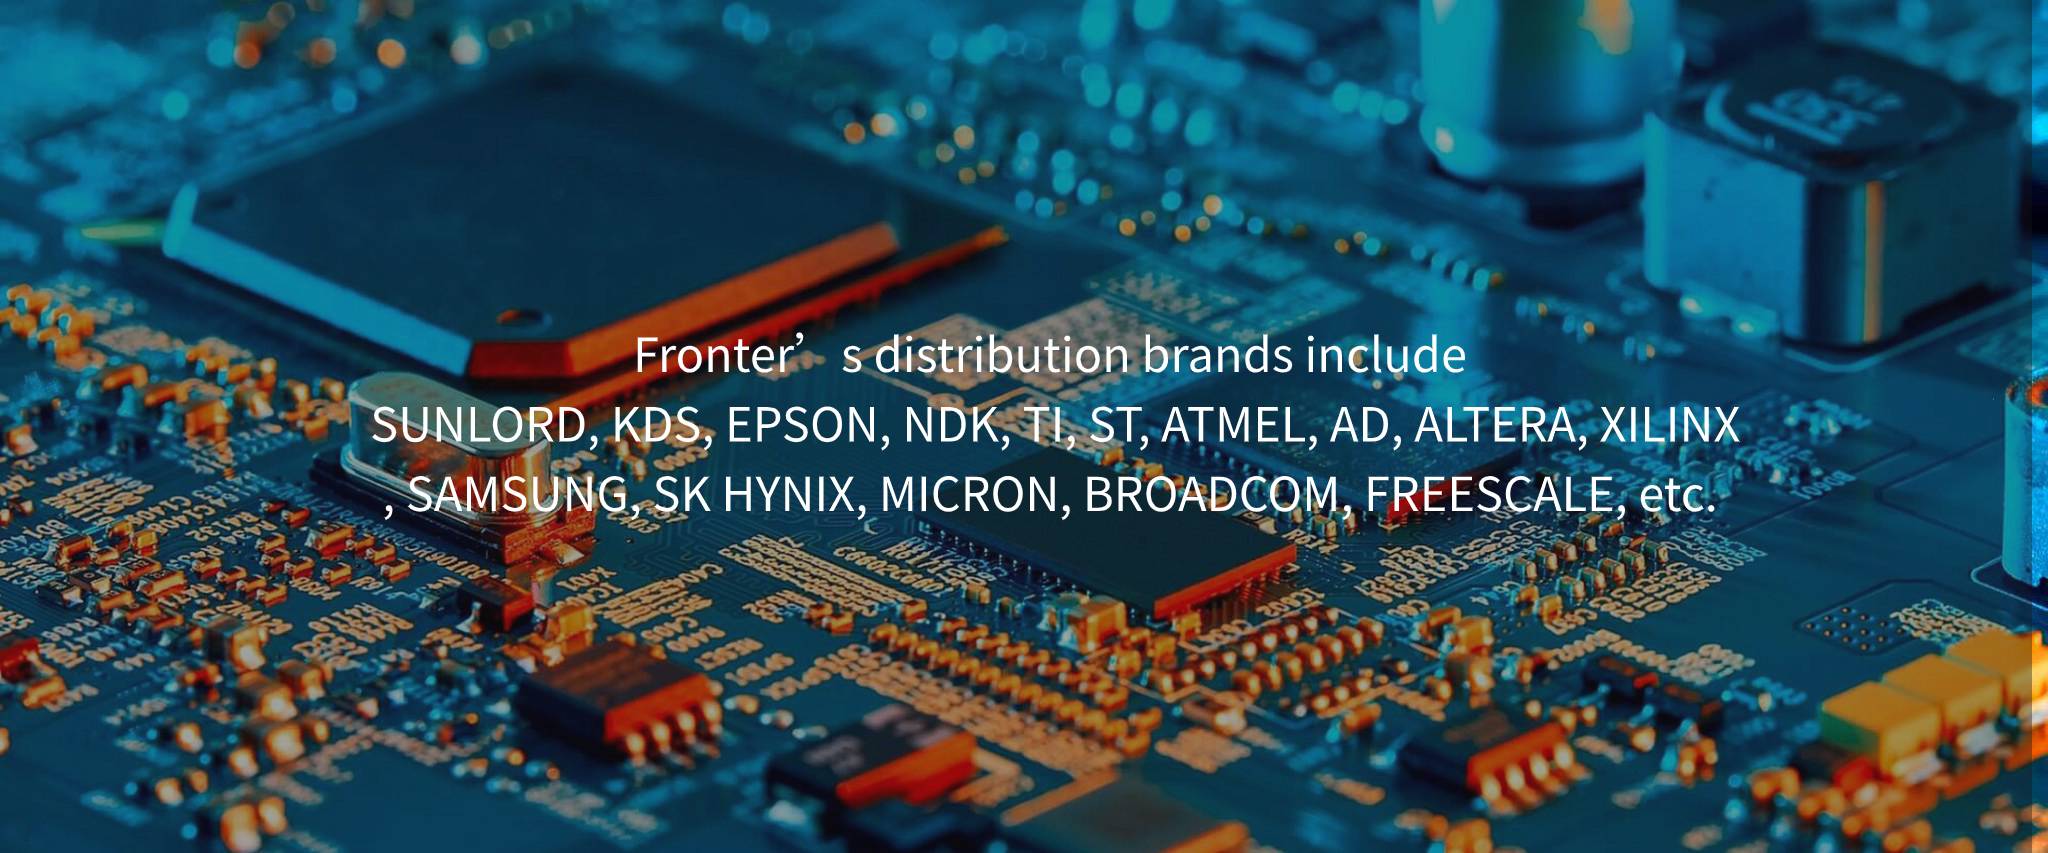 Components - Fronter Electronics Co., Ltd